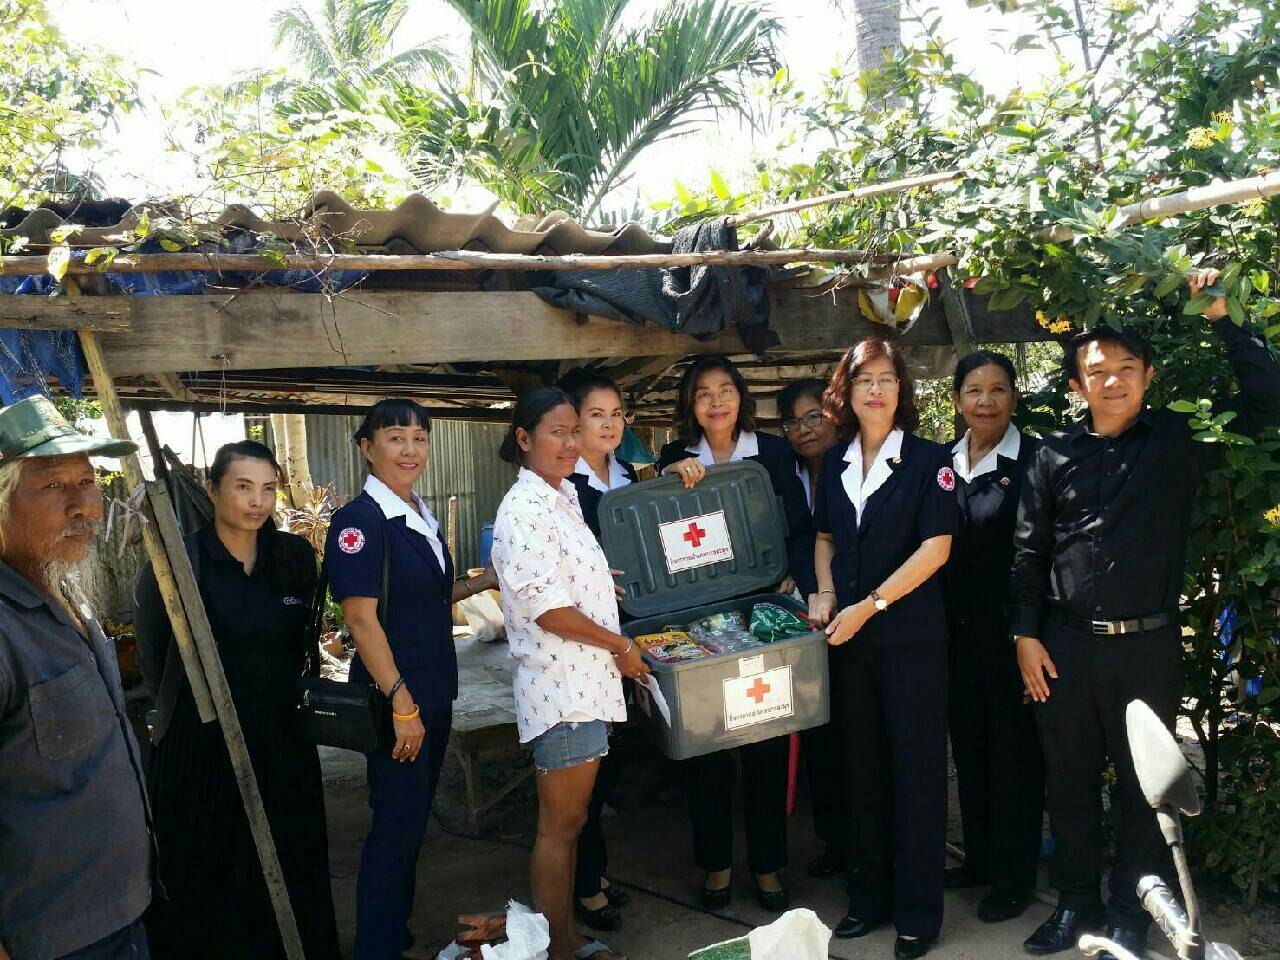 The Banglamung Red Cross donated 4,000 baht to Nongprue fire victim Panada Kritanan to help forward her career training.